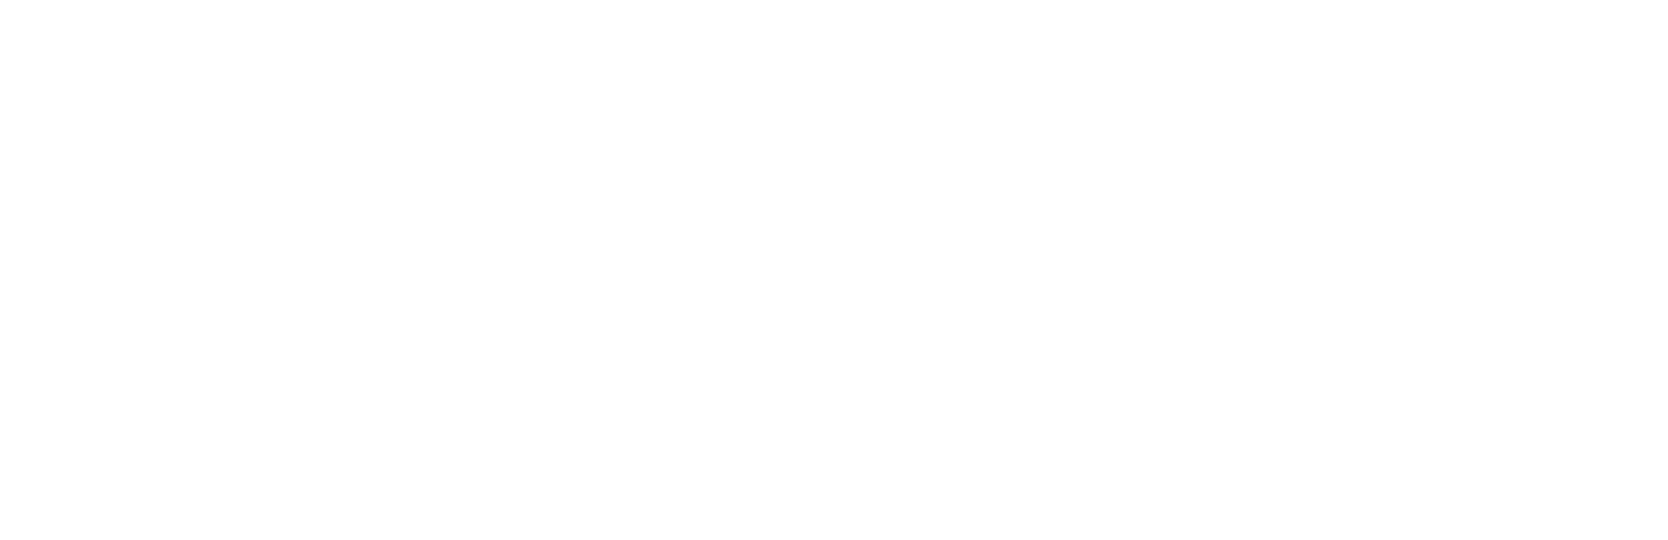 Redmine Logo - Redmine Theme Boostmine - User friendly and Enhanced Interface